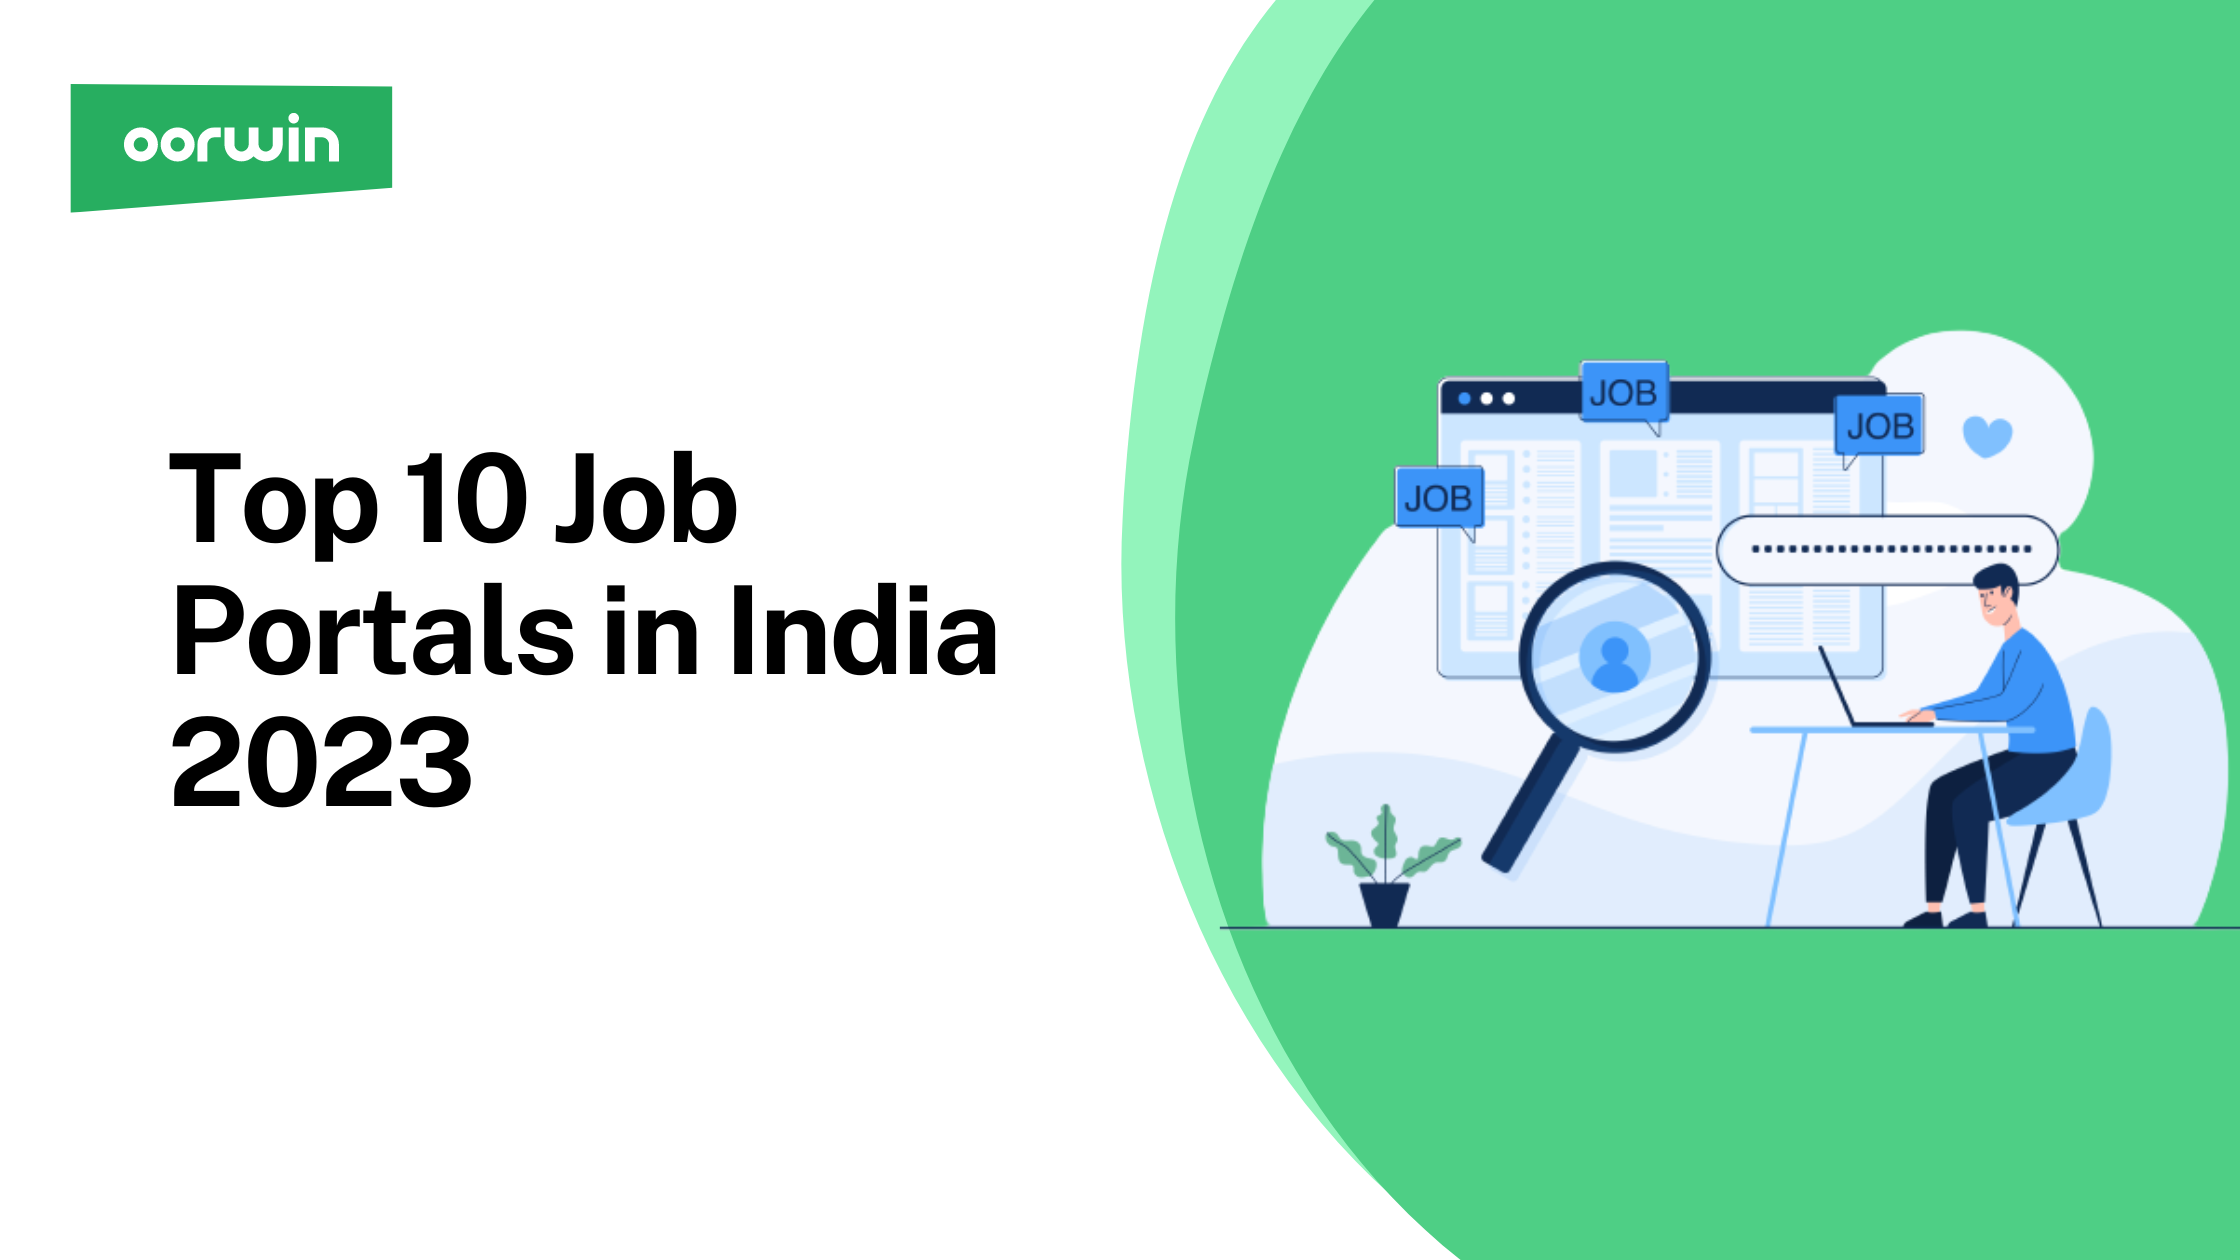 Top 10 Job Portals in India in 2023